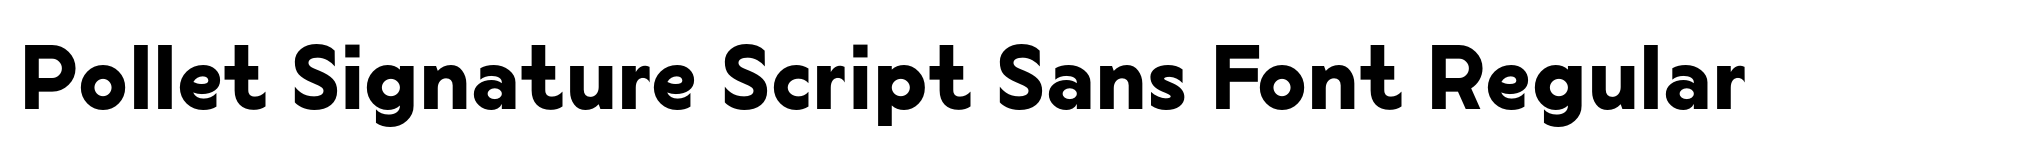 Pollet Signature Script Sans Font Regular image